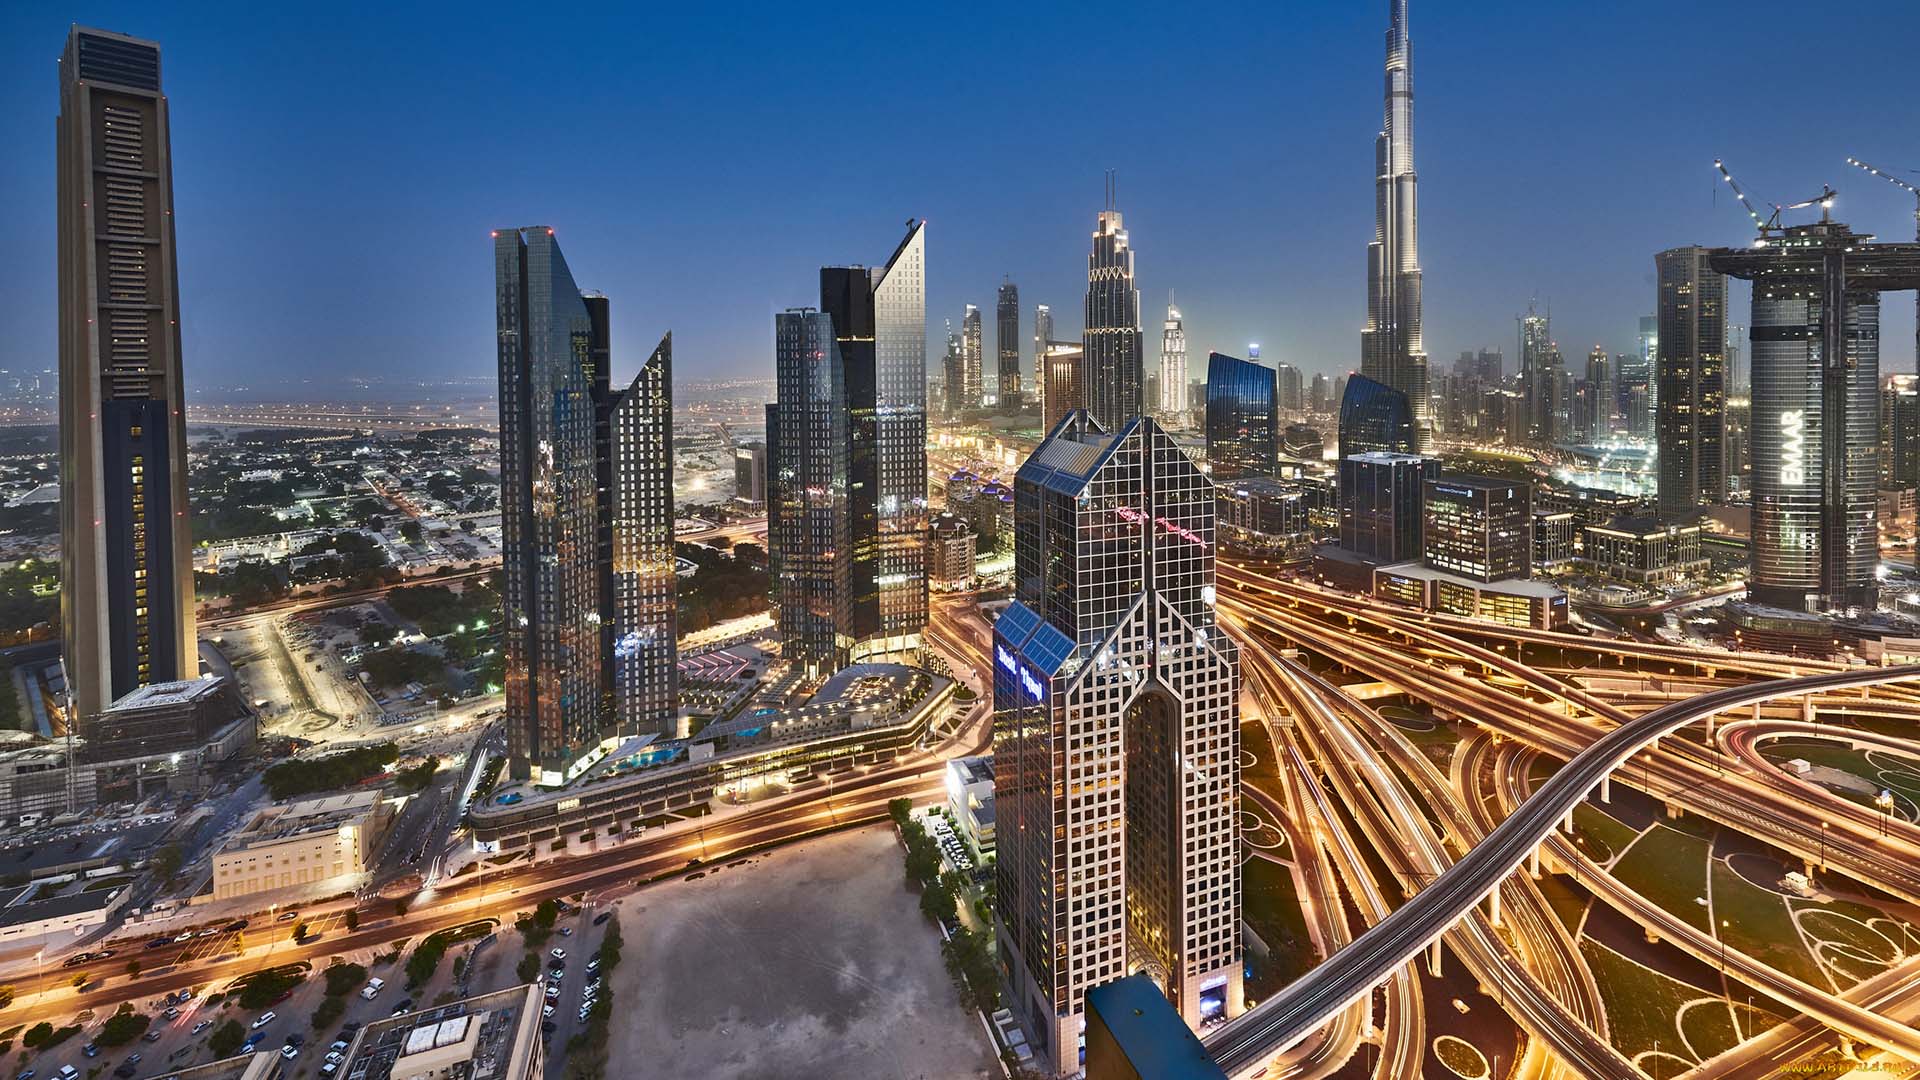 Downtown Dubai - 5